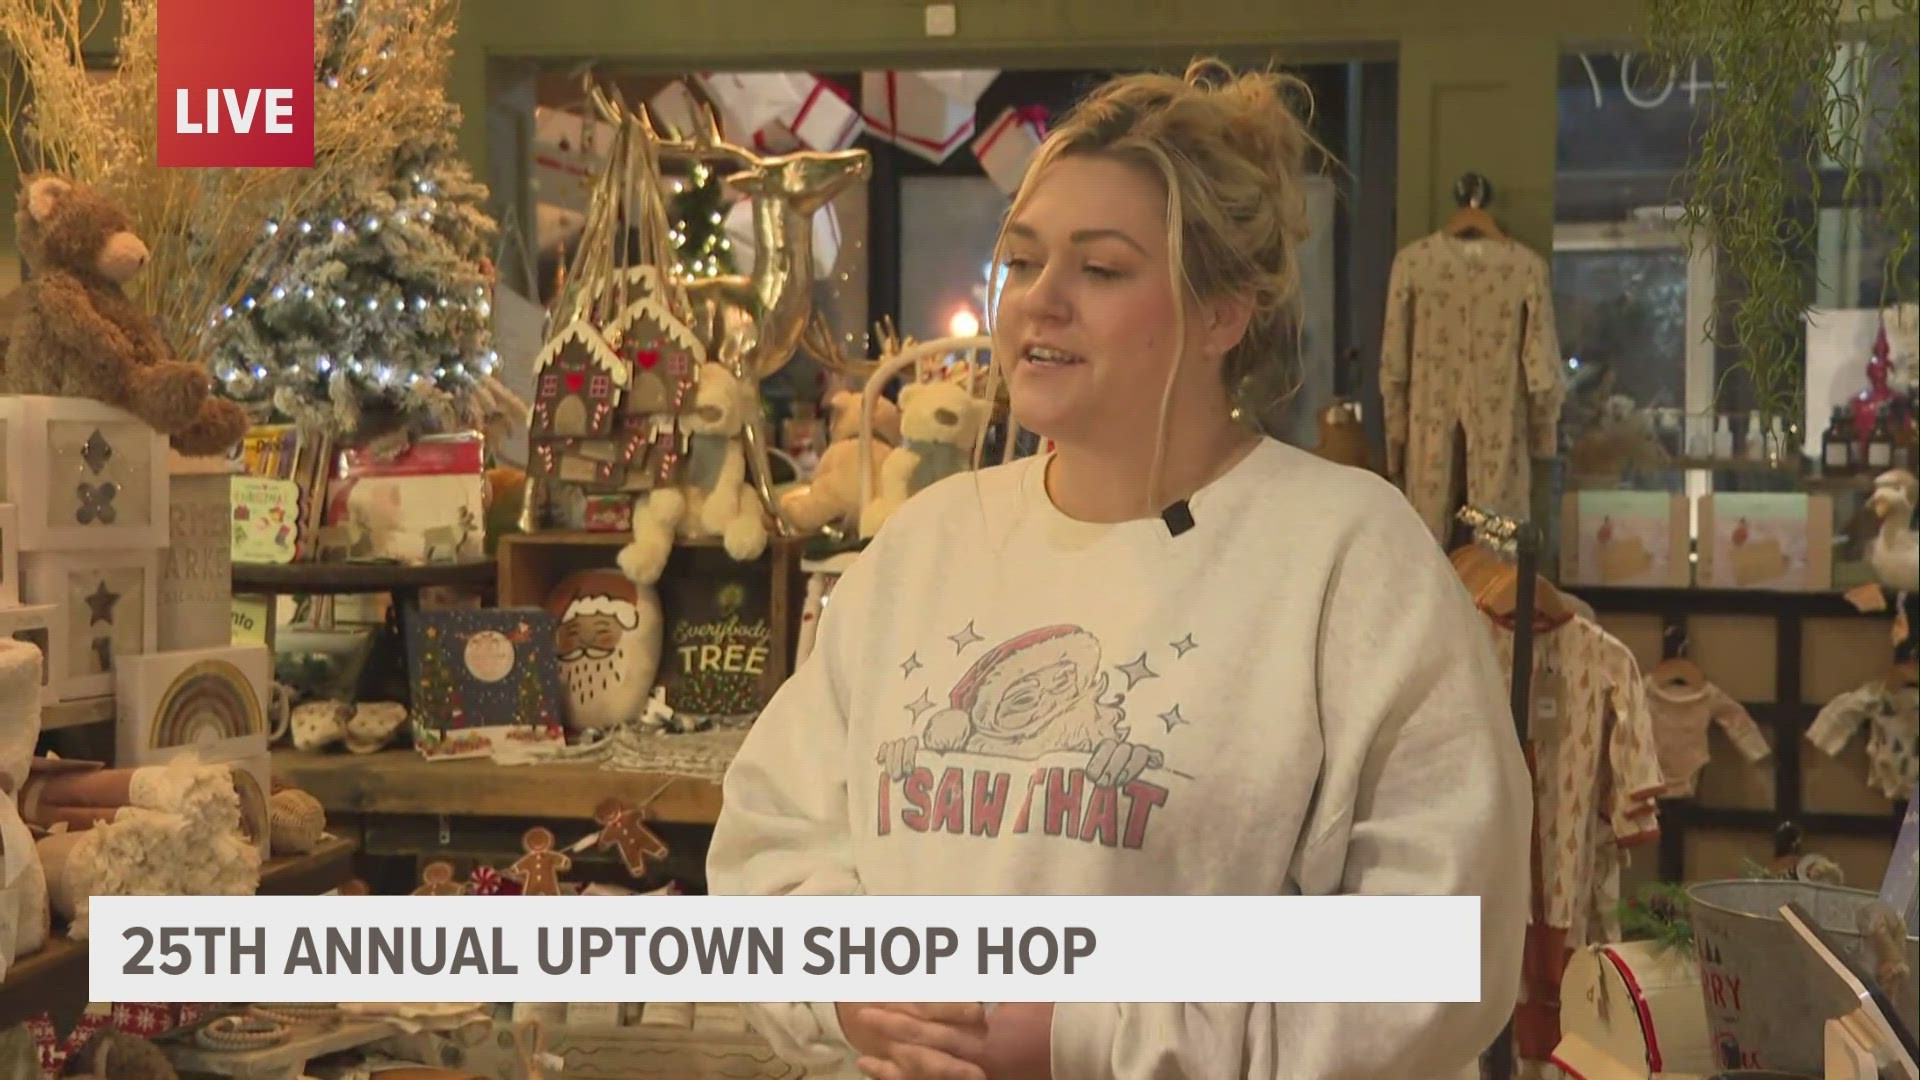 Uptown Shop Hop returns to Grand Rapids